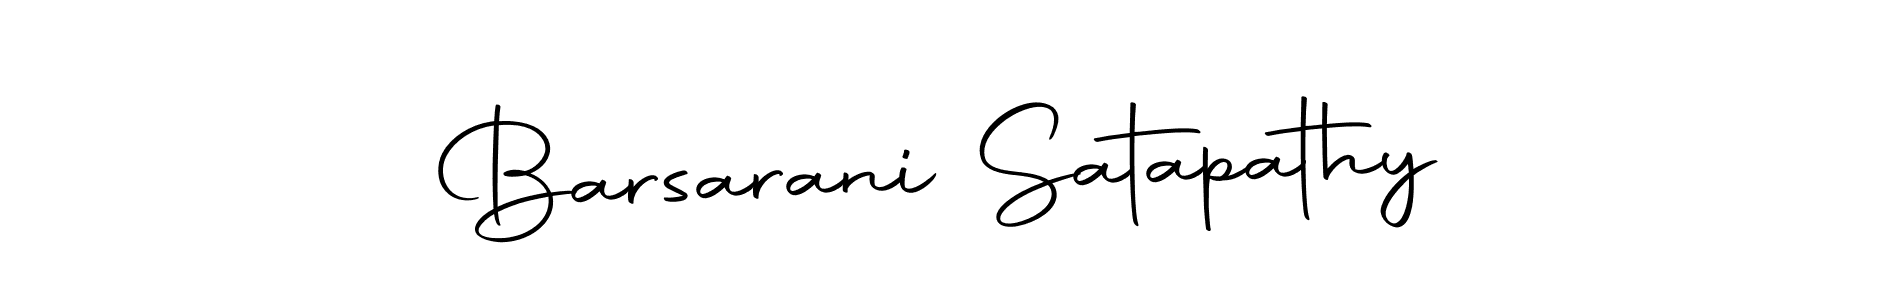 How to Draw Barsarani Satapathy signature style? Autography-DOLnW is a latest design signature styles for name Barsarani Satapathy. Barsarani Satapathy signature style 10 images and pictures png